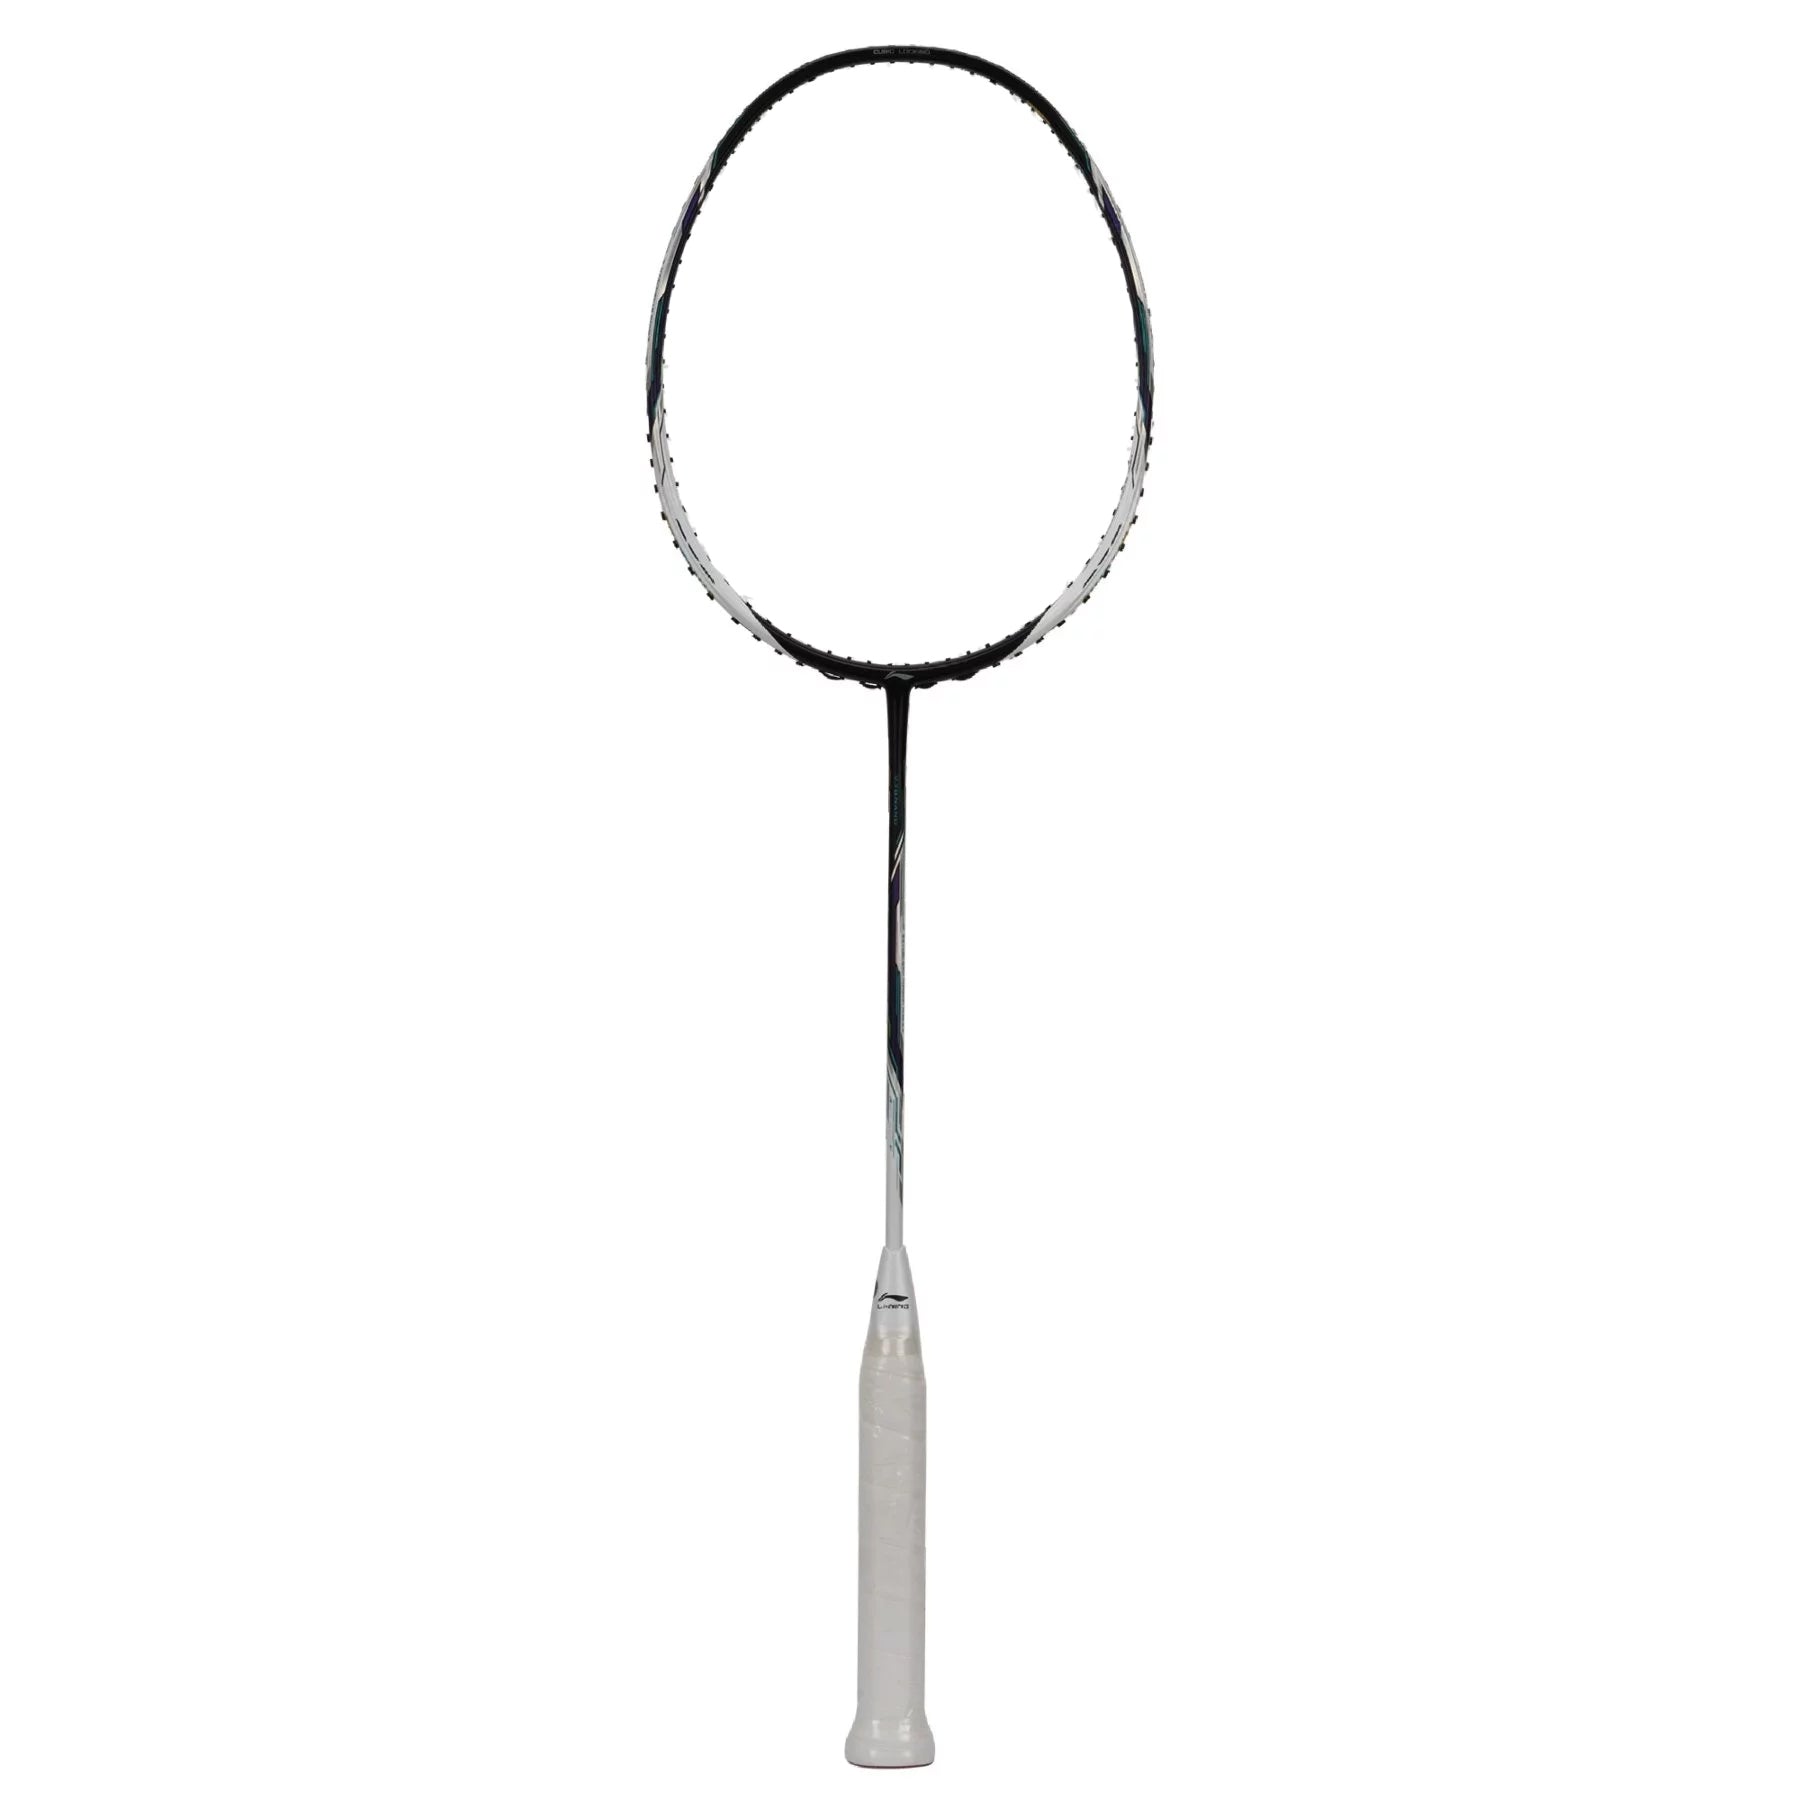 Li-Ning Tectonic 9 Badminton Racquet, Black/White - 79 Grams (5U) - Best Price online Prokicksports.com